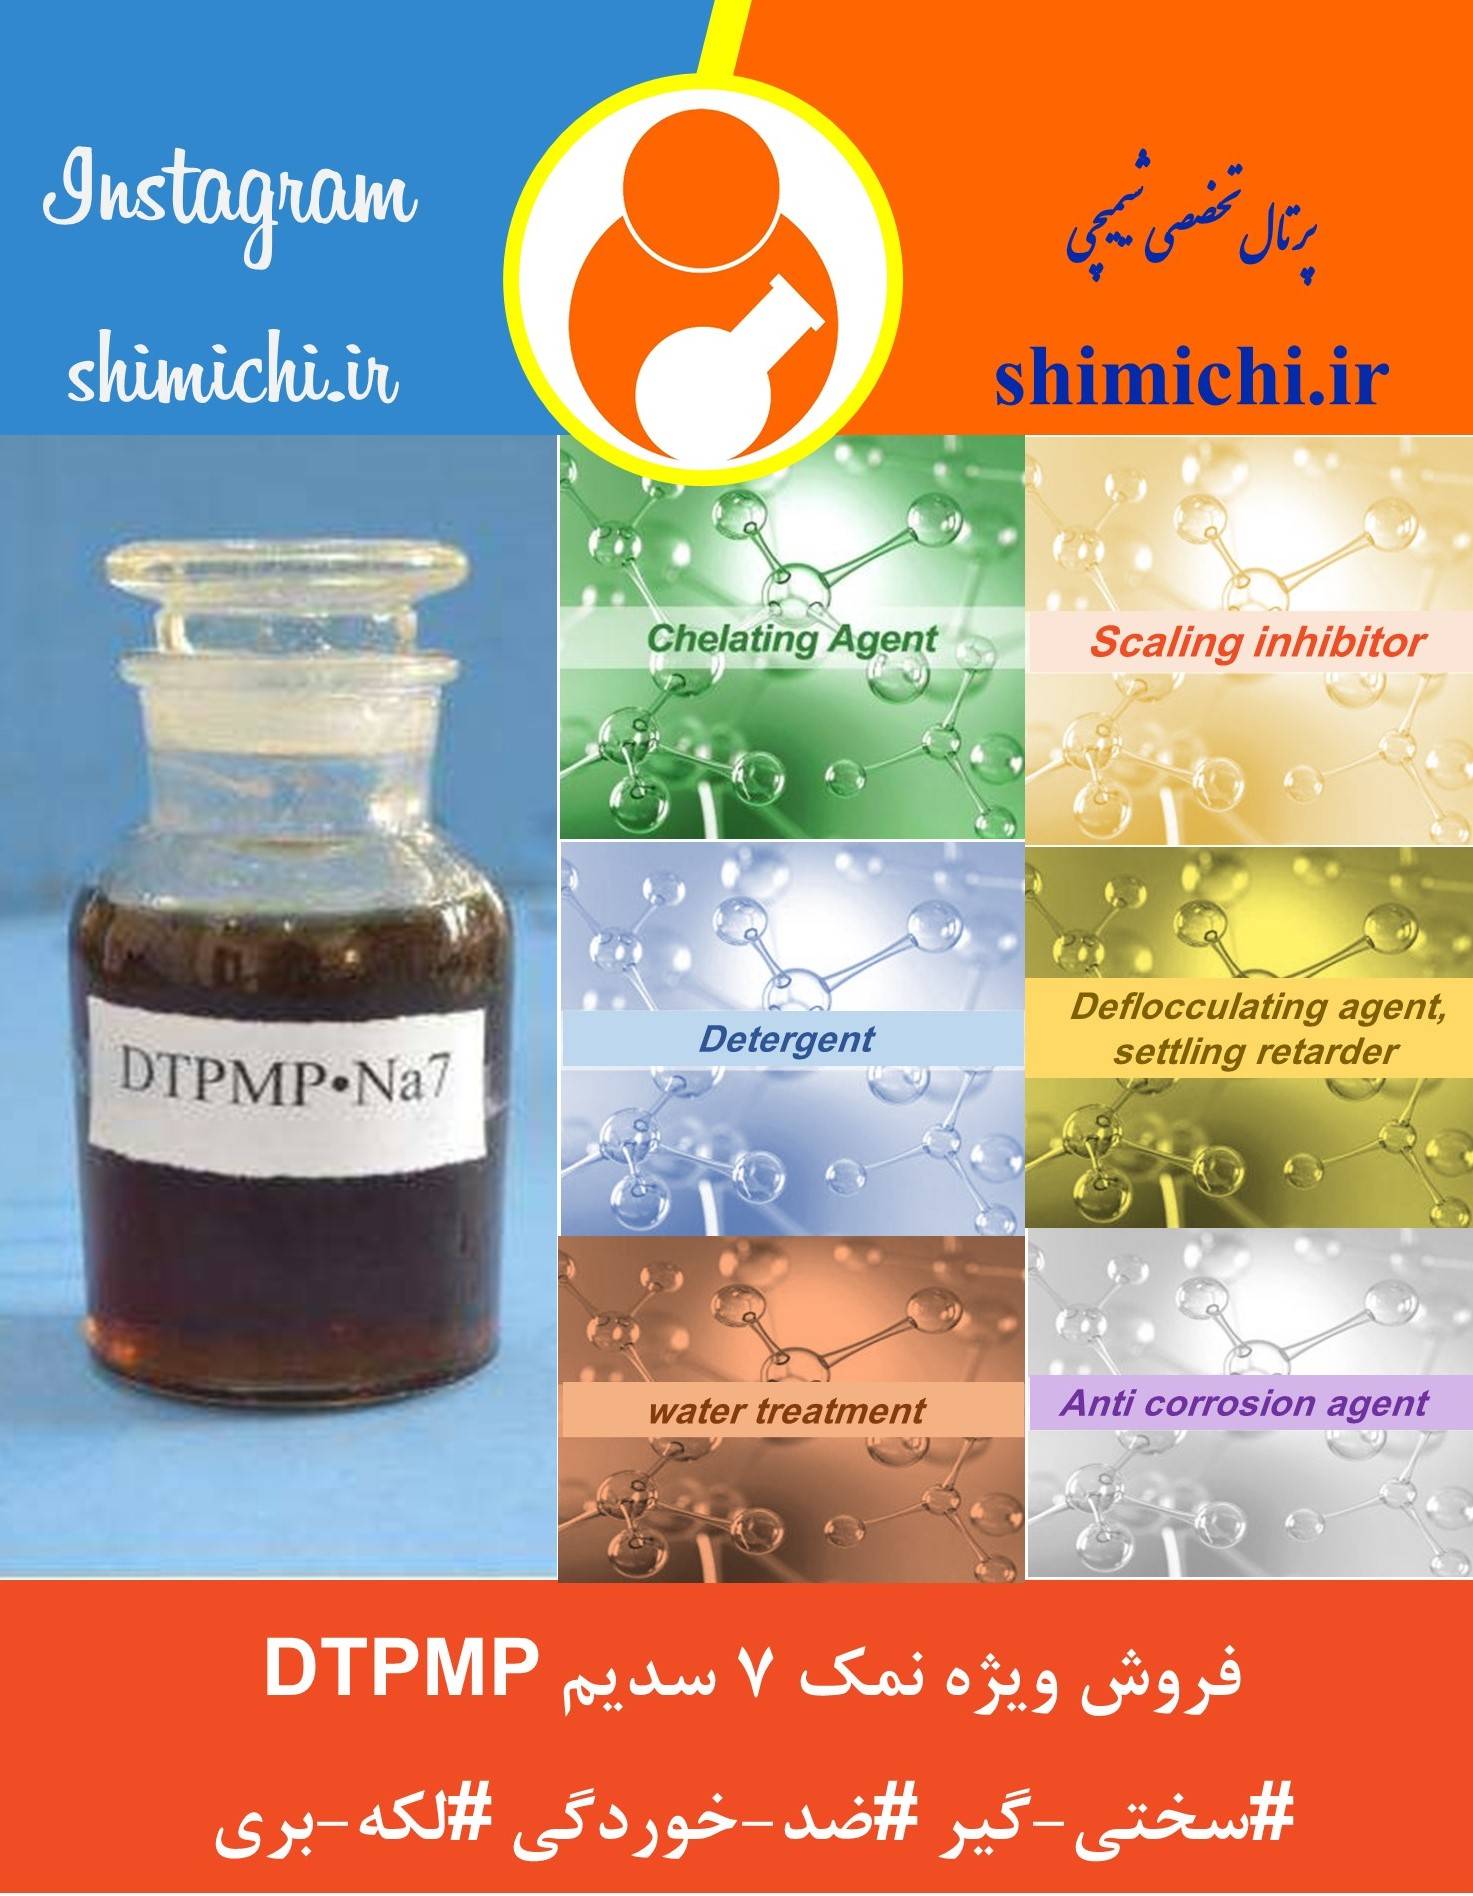 فروش ویژه نمک هفت سدیمی دی اتیلن پنتا متیلن فسفونیک اسید (DTPMP) در شیمیچی